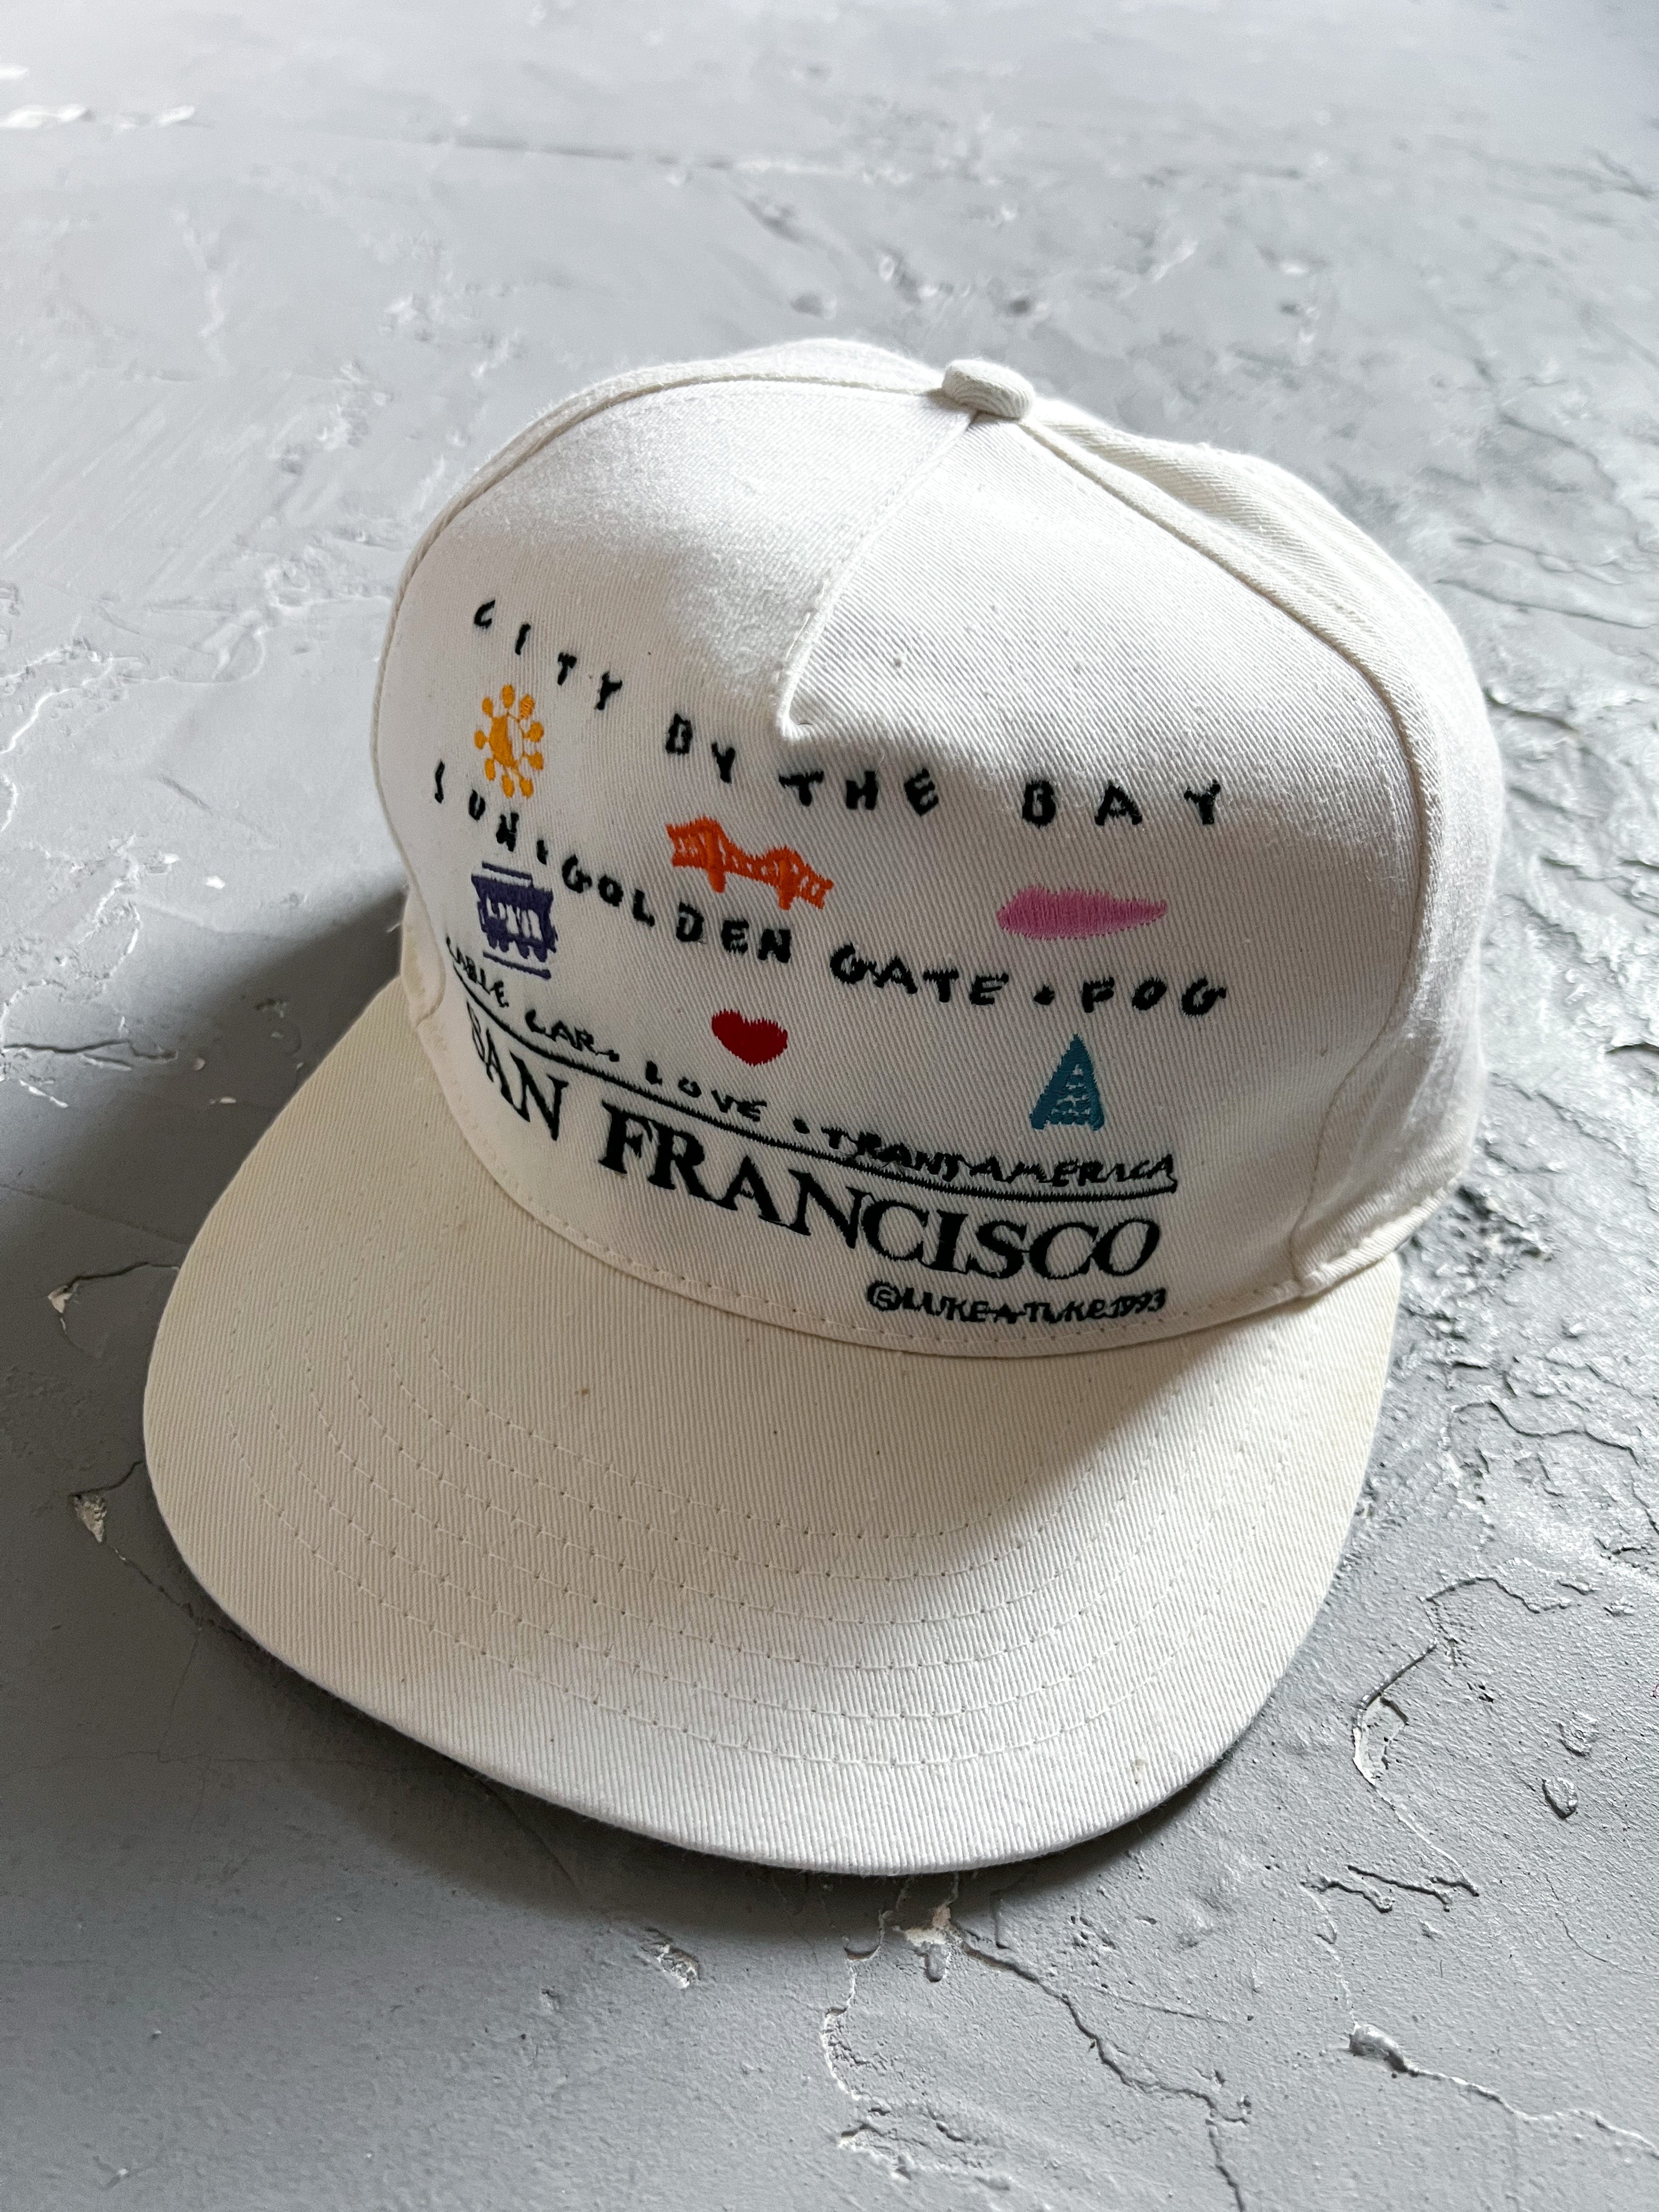 1993 San Francisco Trucker Hat